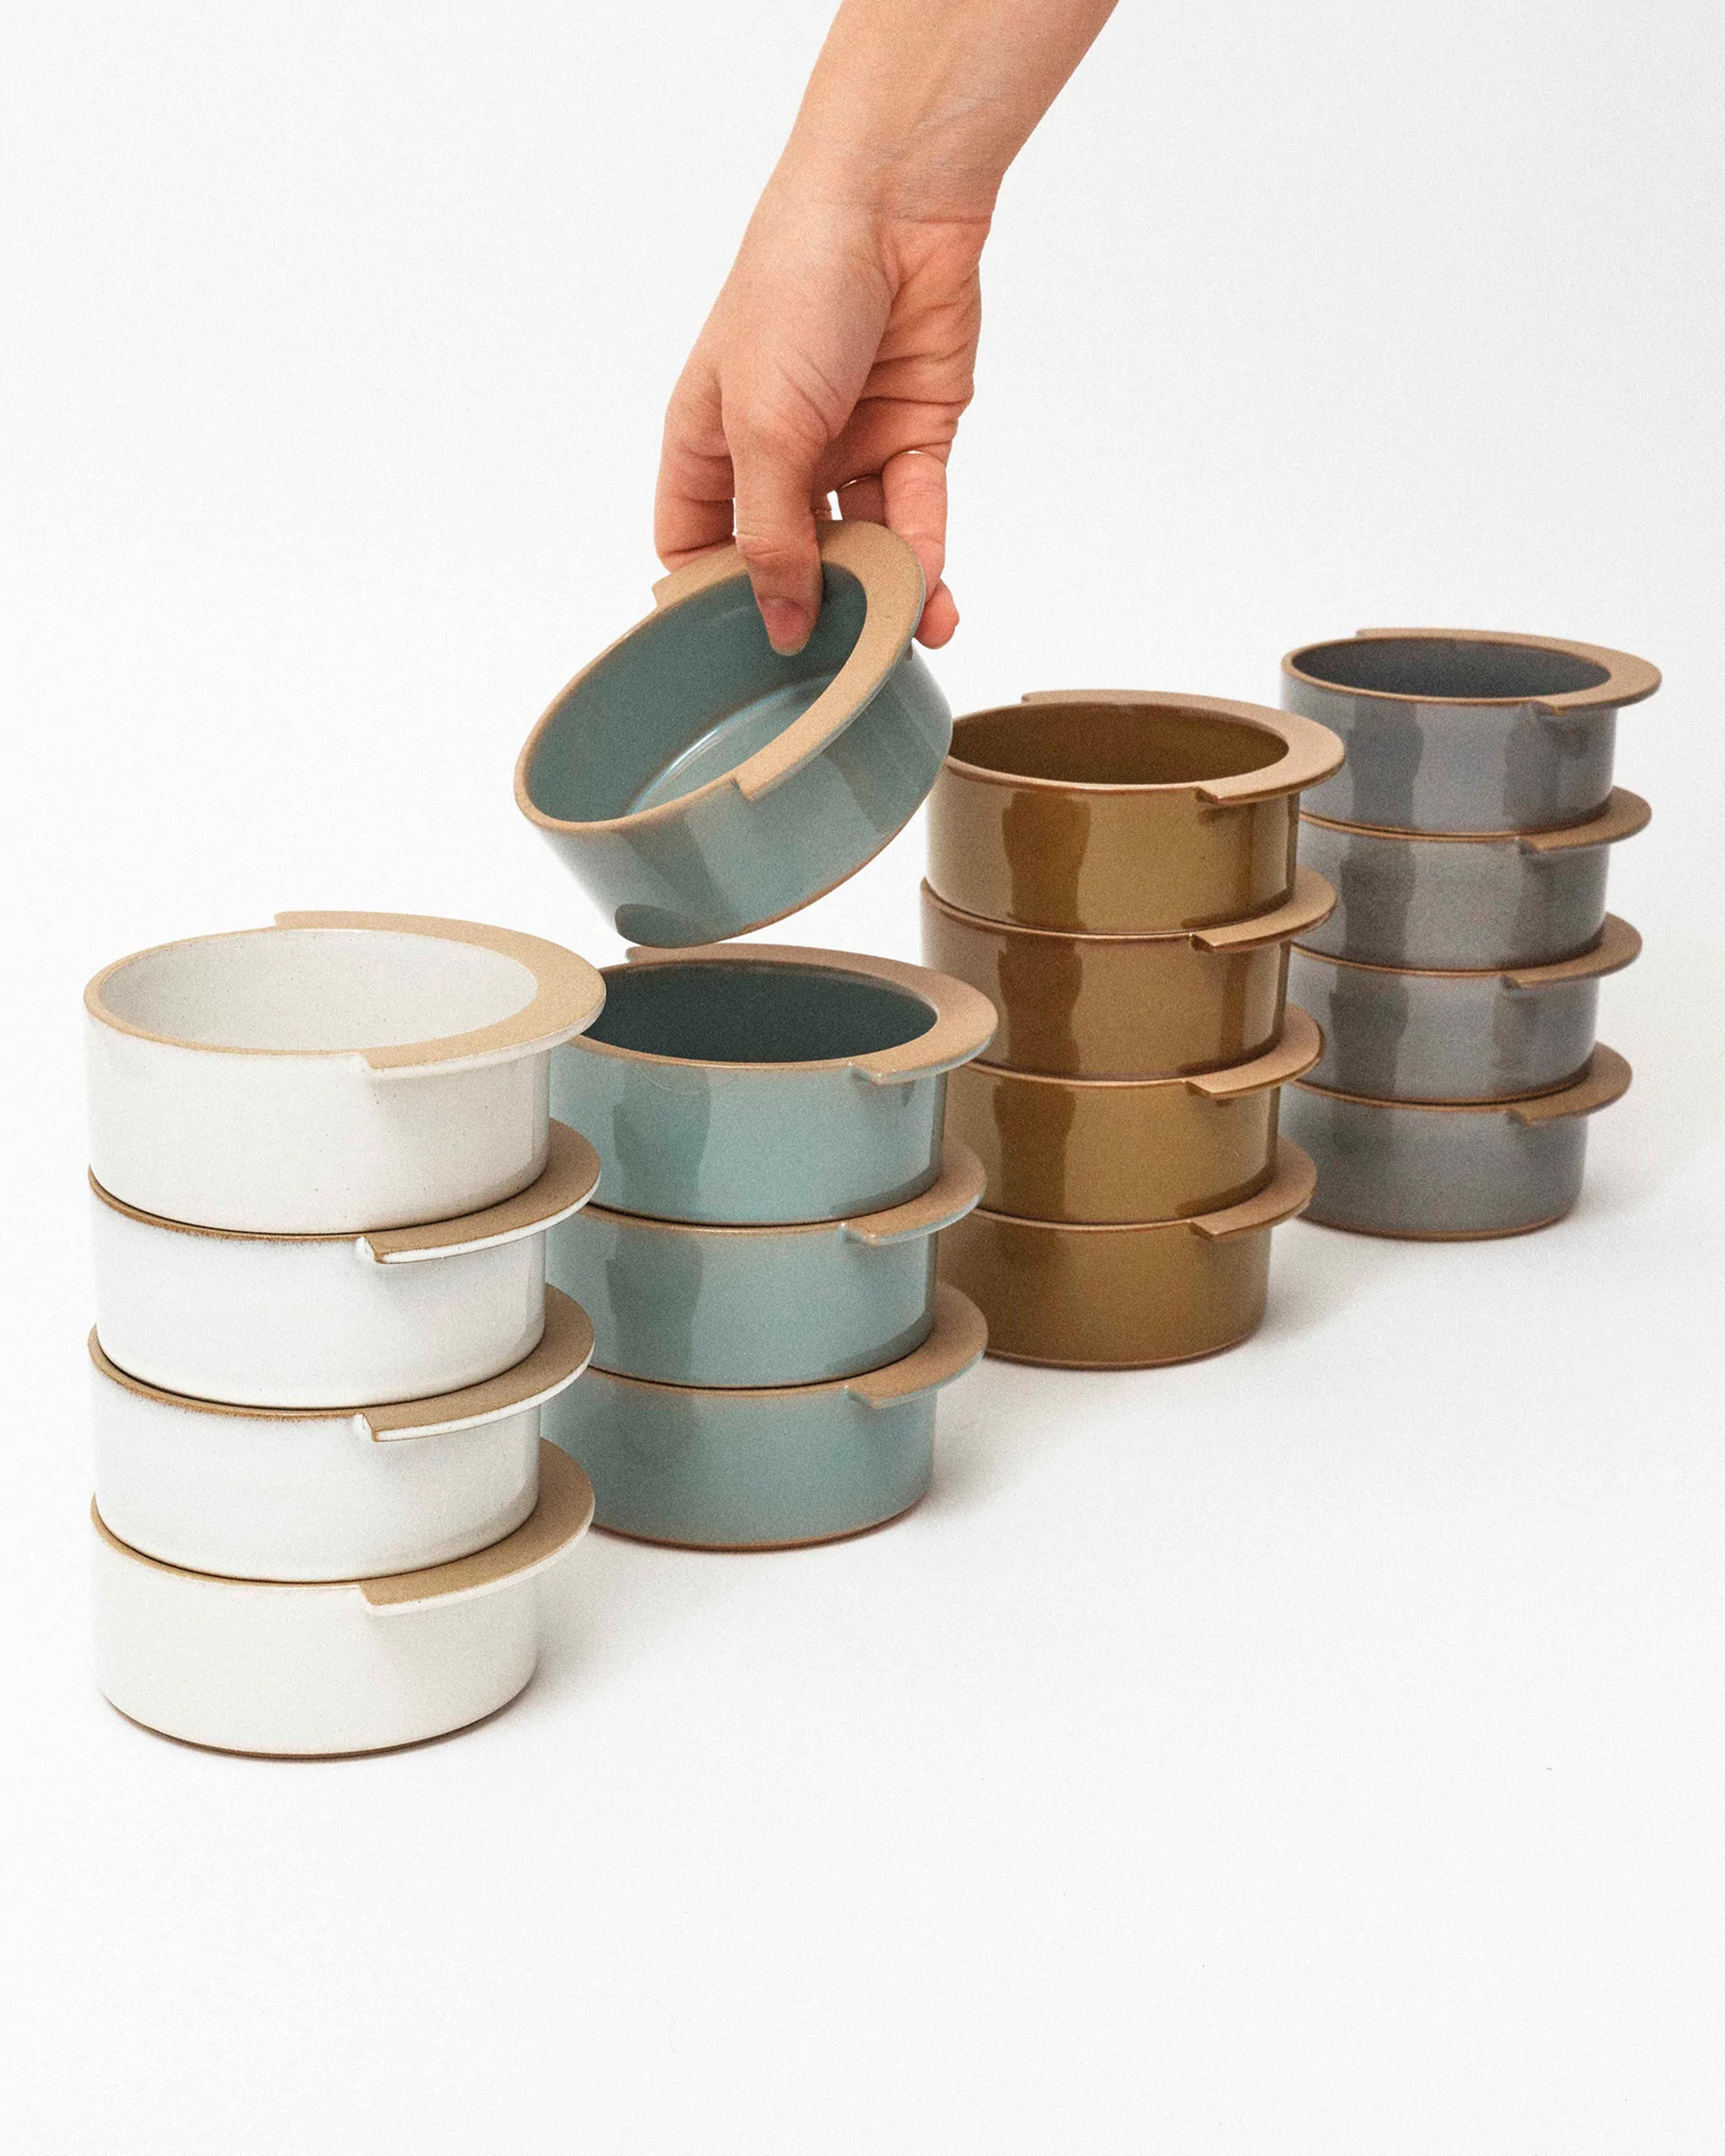 Little Bowl | Ceramic